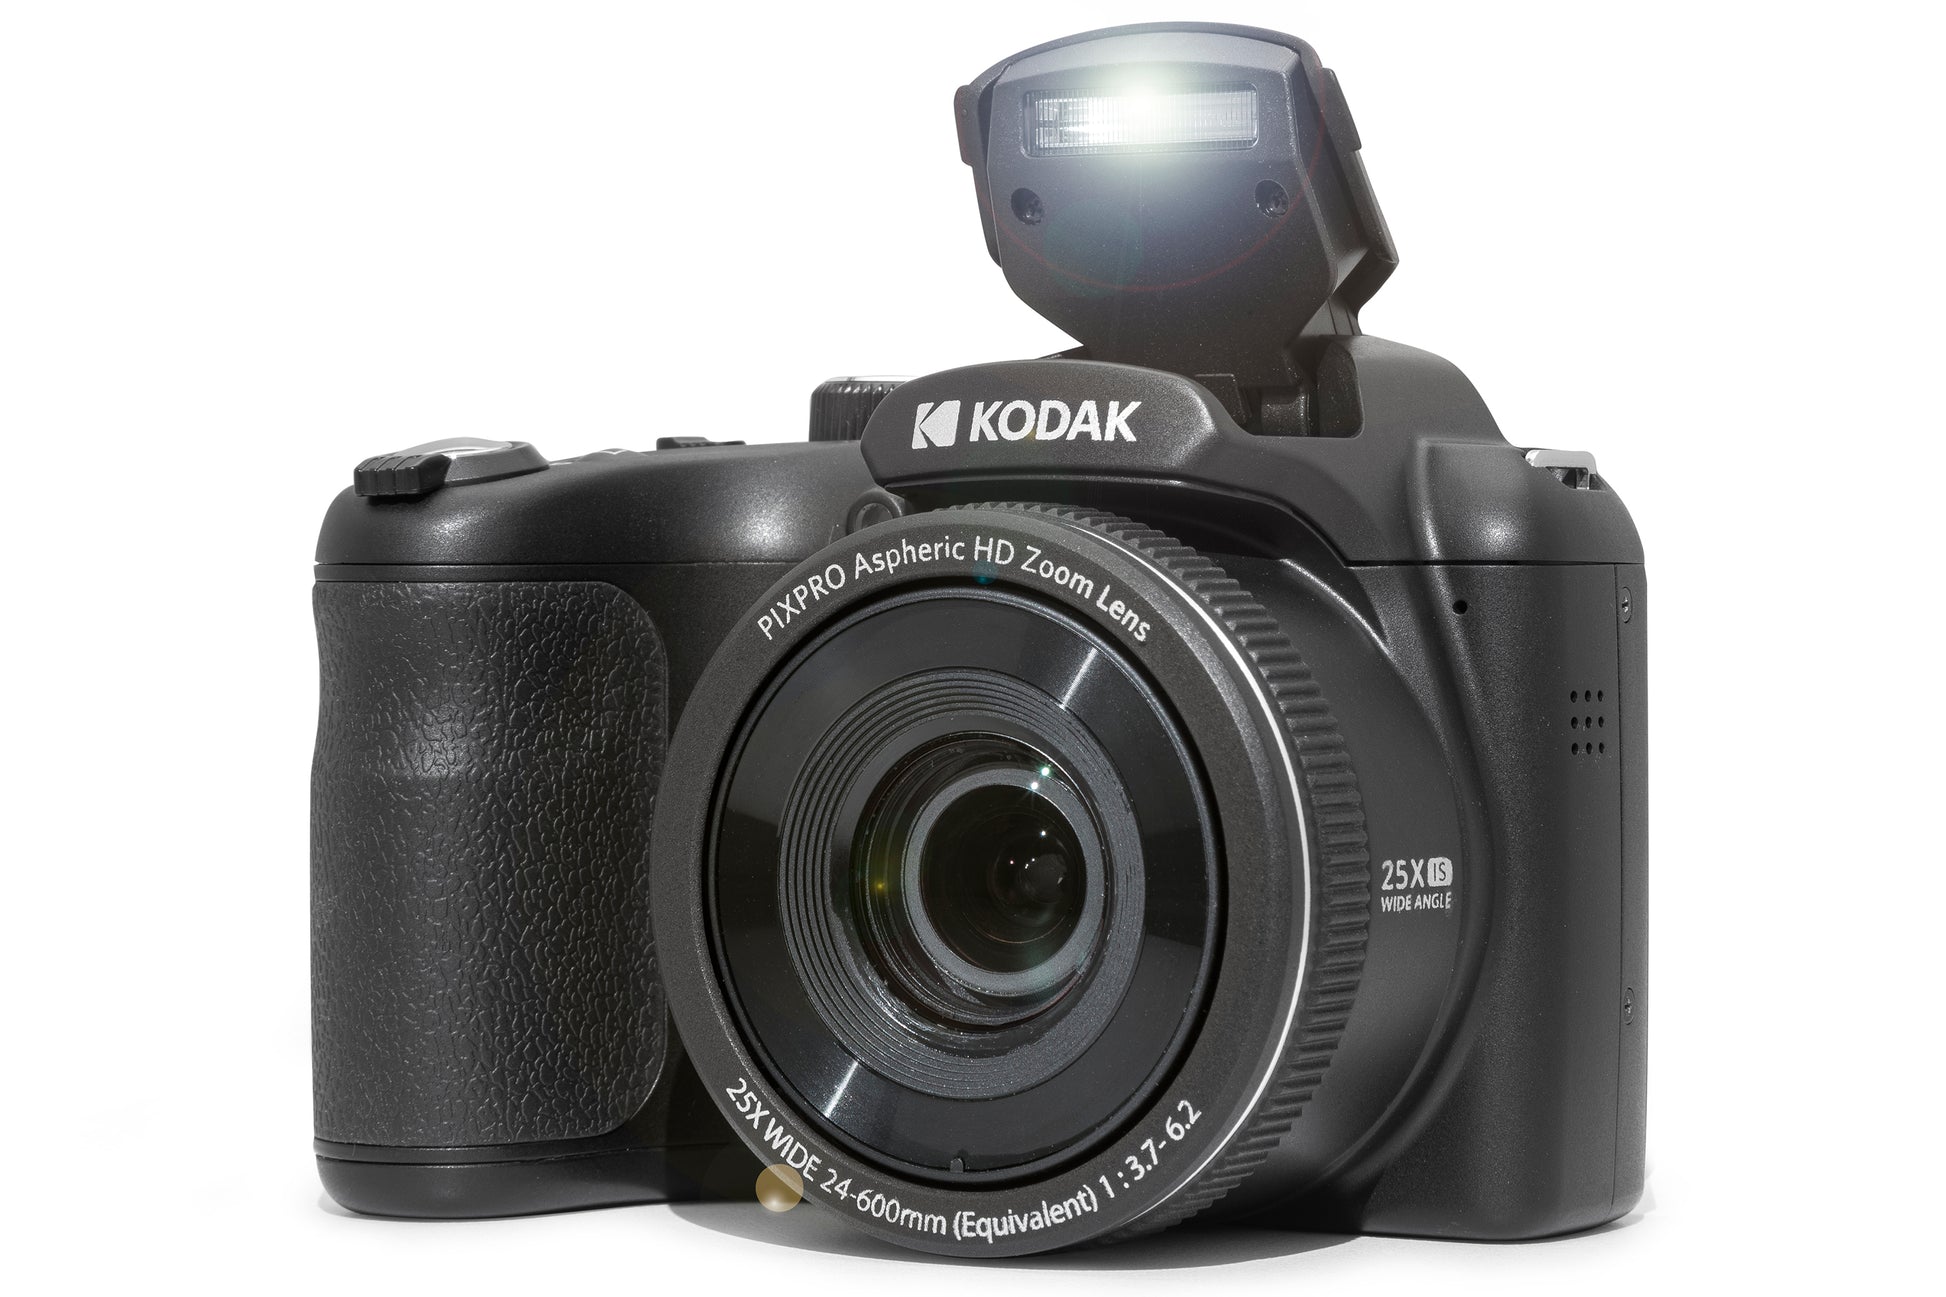 Kodak PIXPRO AZ255 Bridge Camera with 4x AA Batteries, 32GB SD, Case & Charger - maplin.co.uk